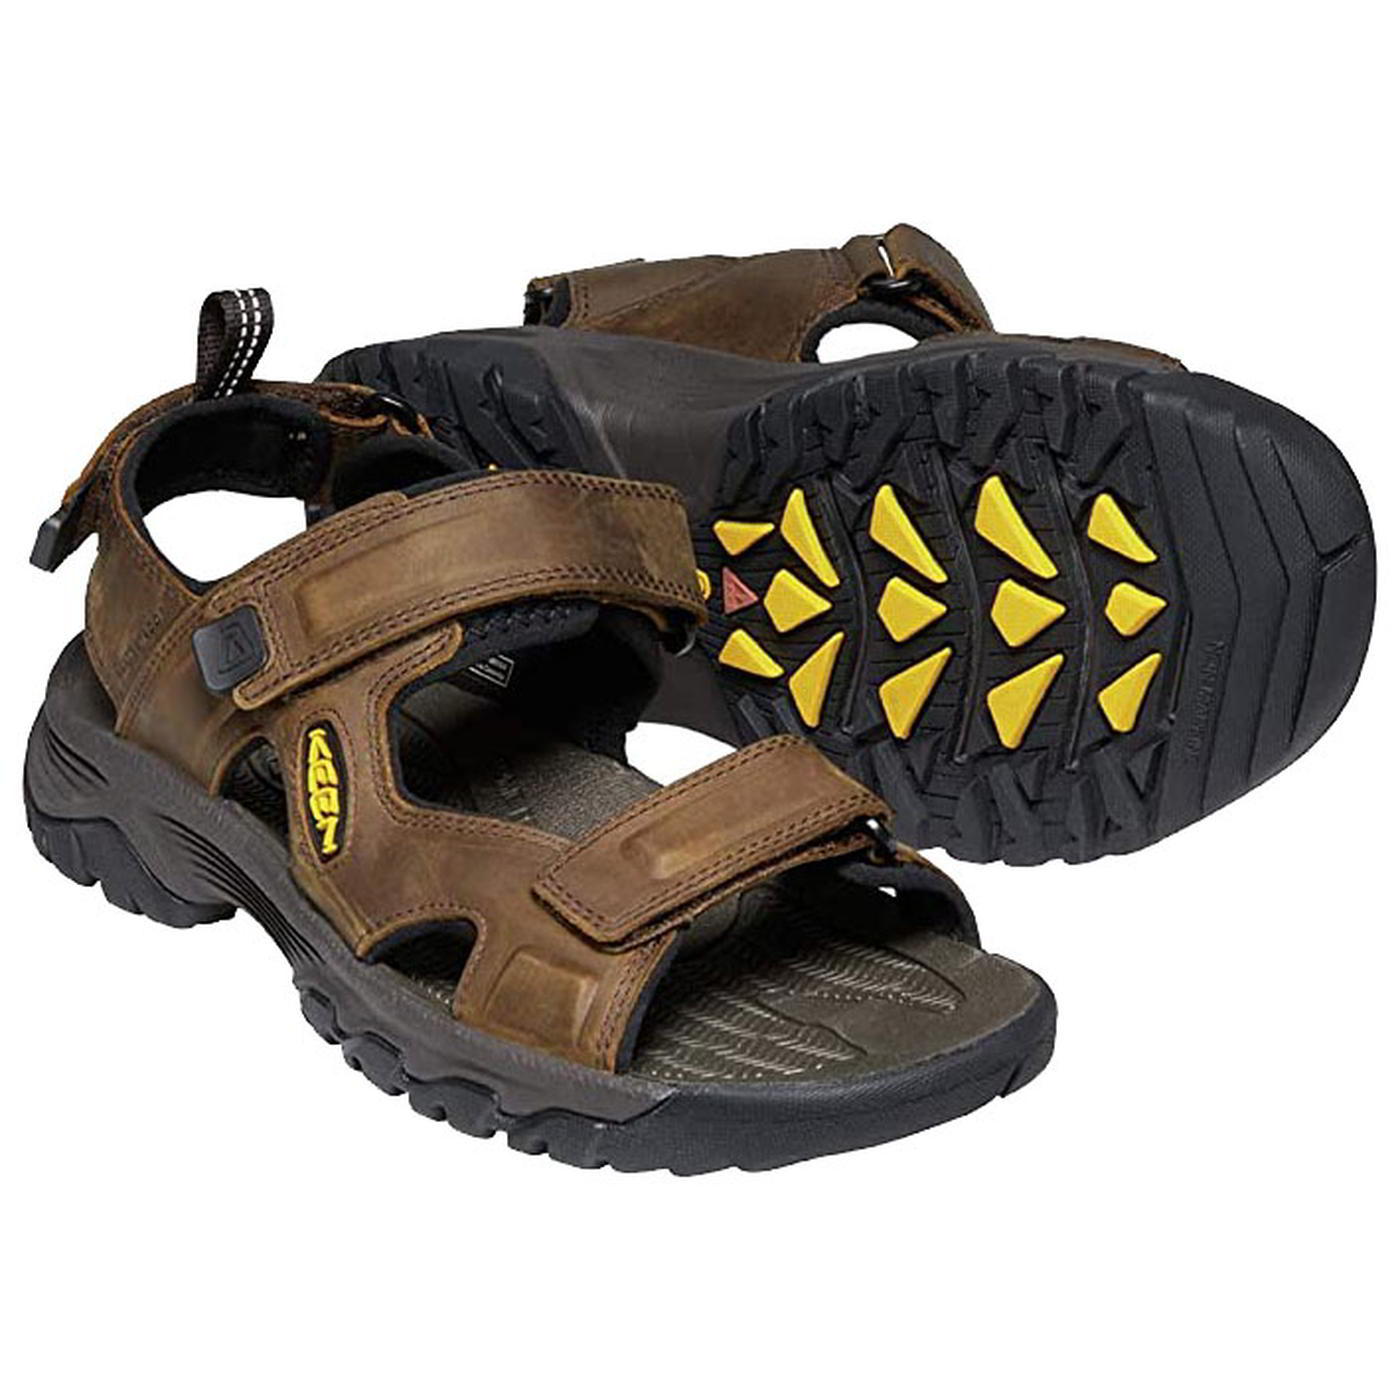 Keen Men's Targhee III Open Toe Adjustable Walking Hiking Sandal - UK 10.5 / US 11.5